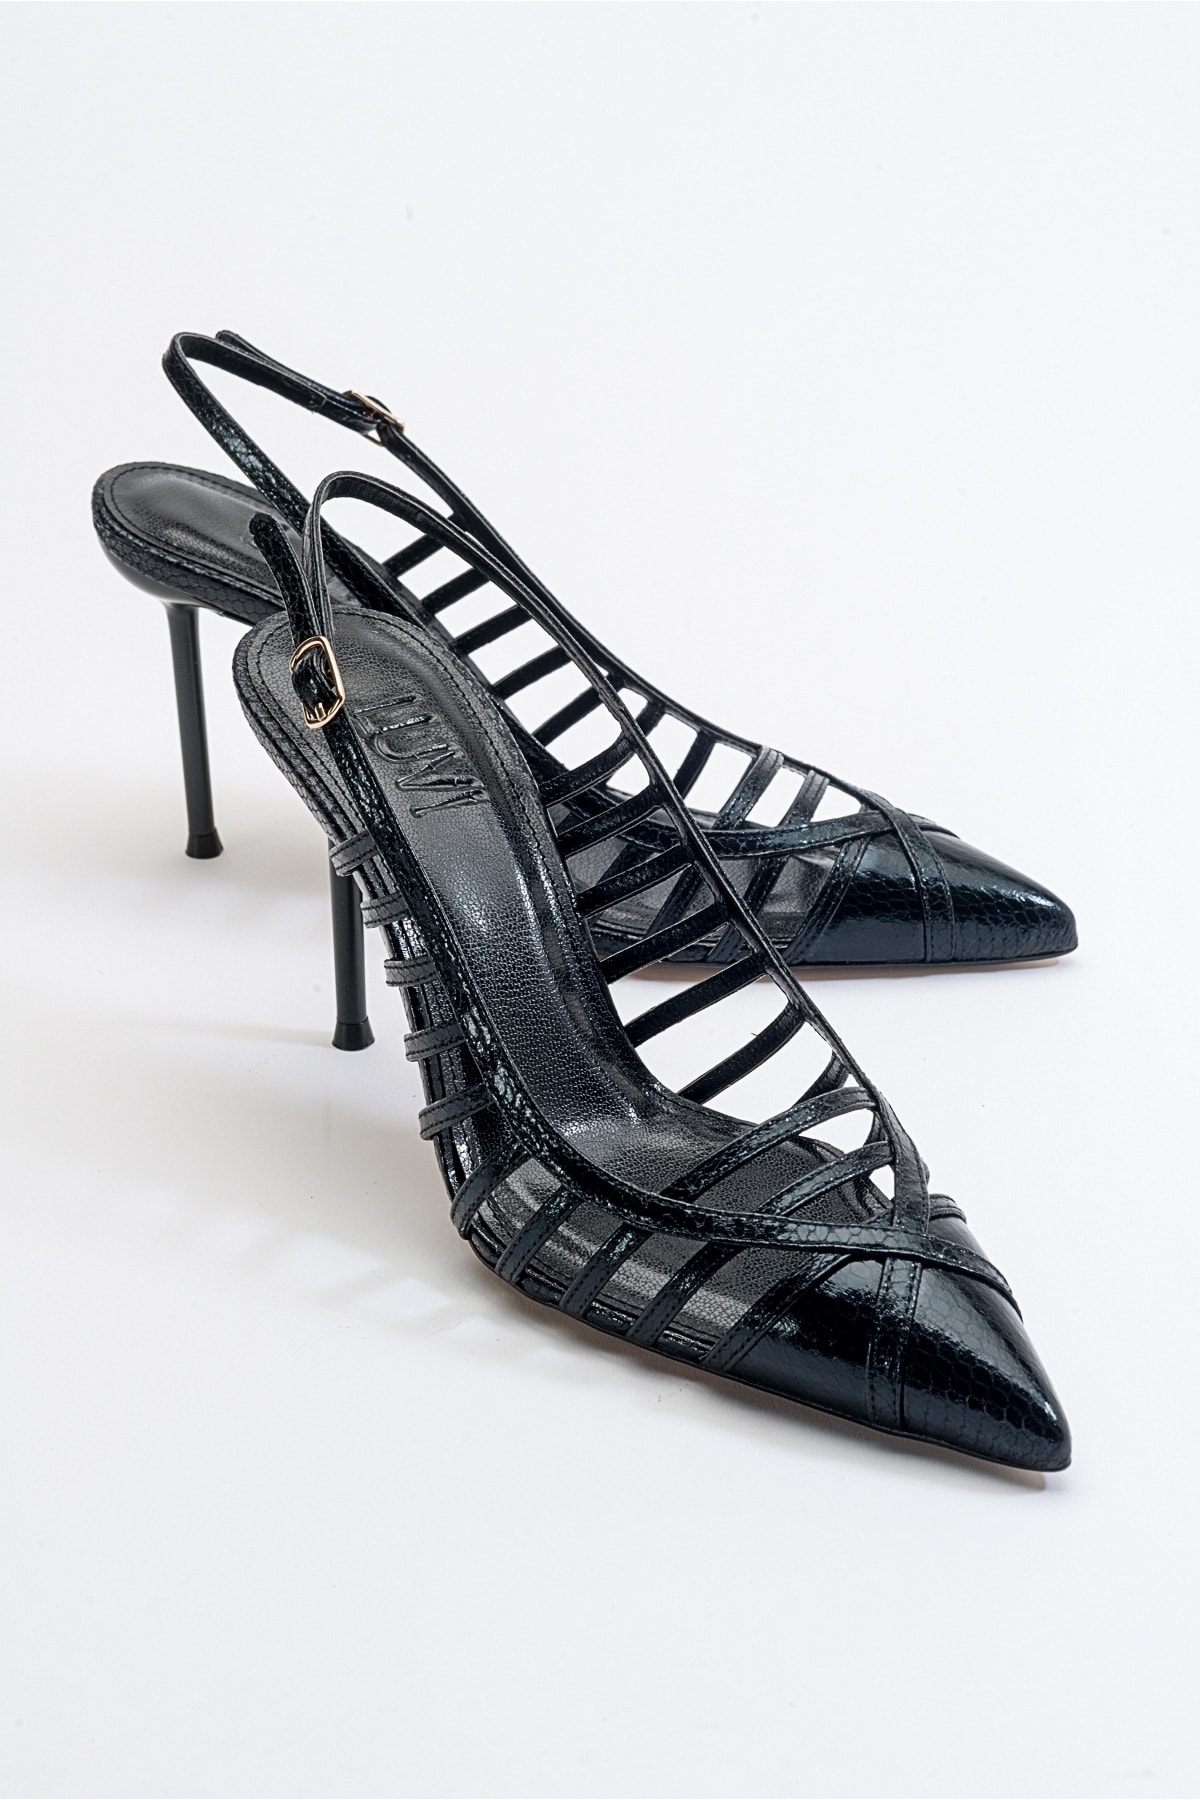 Levně LuviShoes Gesto Women's Black Patterned Heeled Shoes